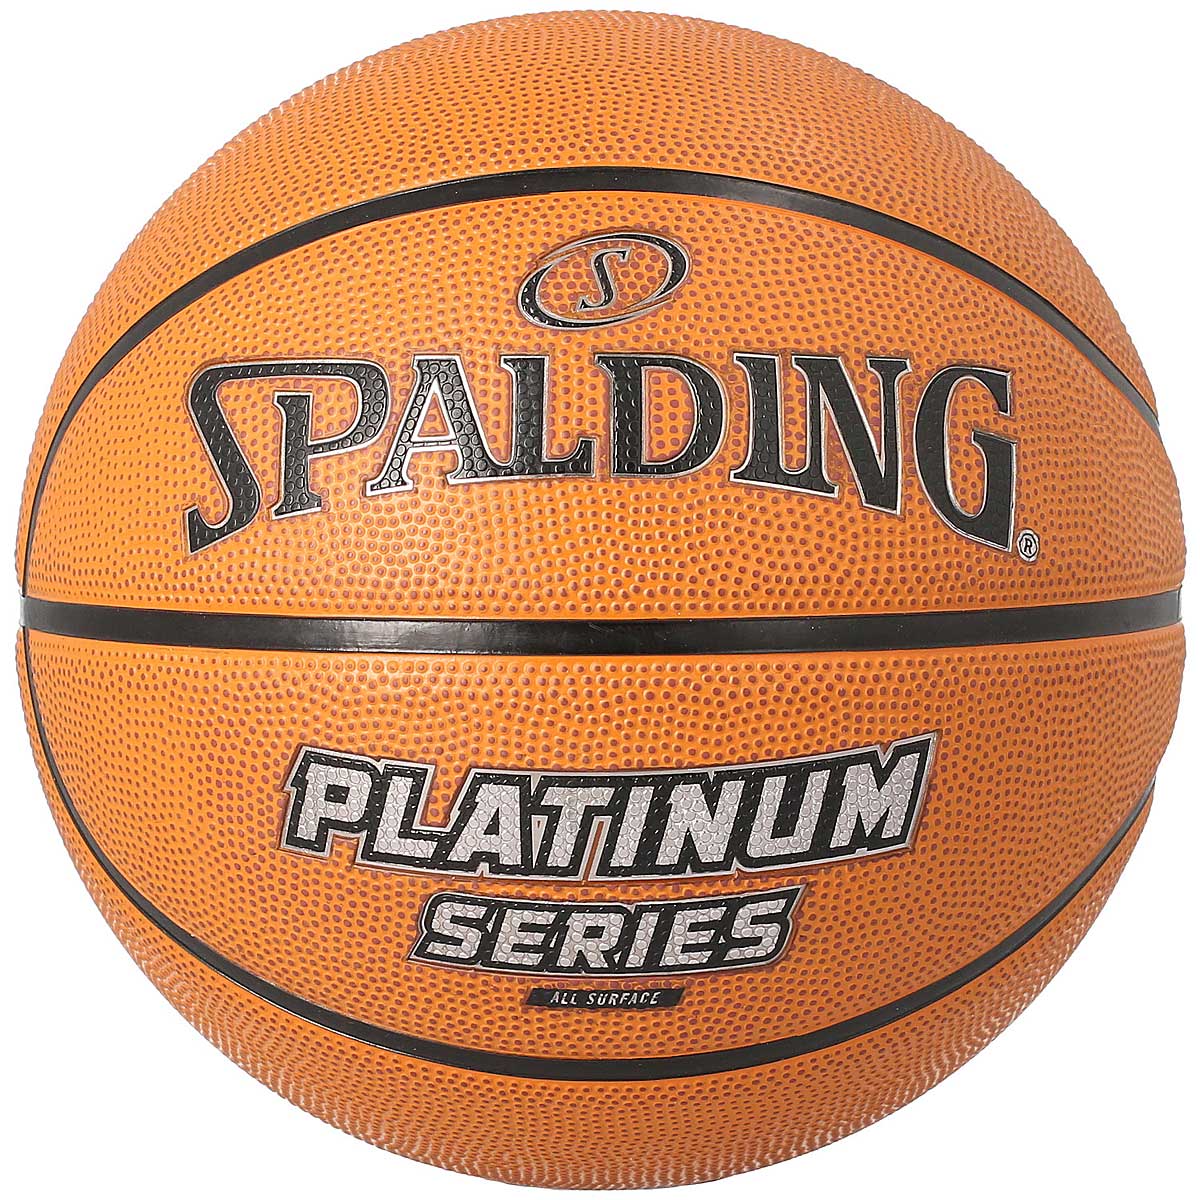 Image of Spalding Platinum Series Sz7 Rubber Basketball, Orange